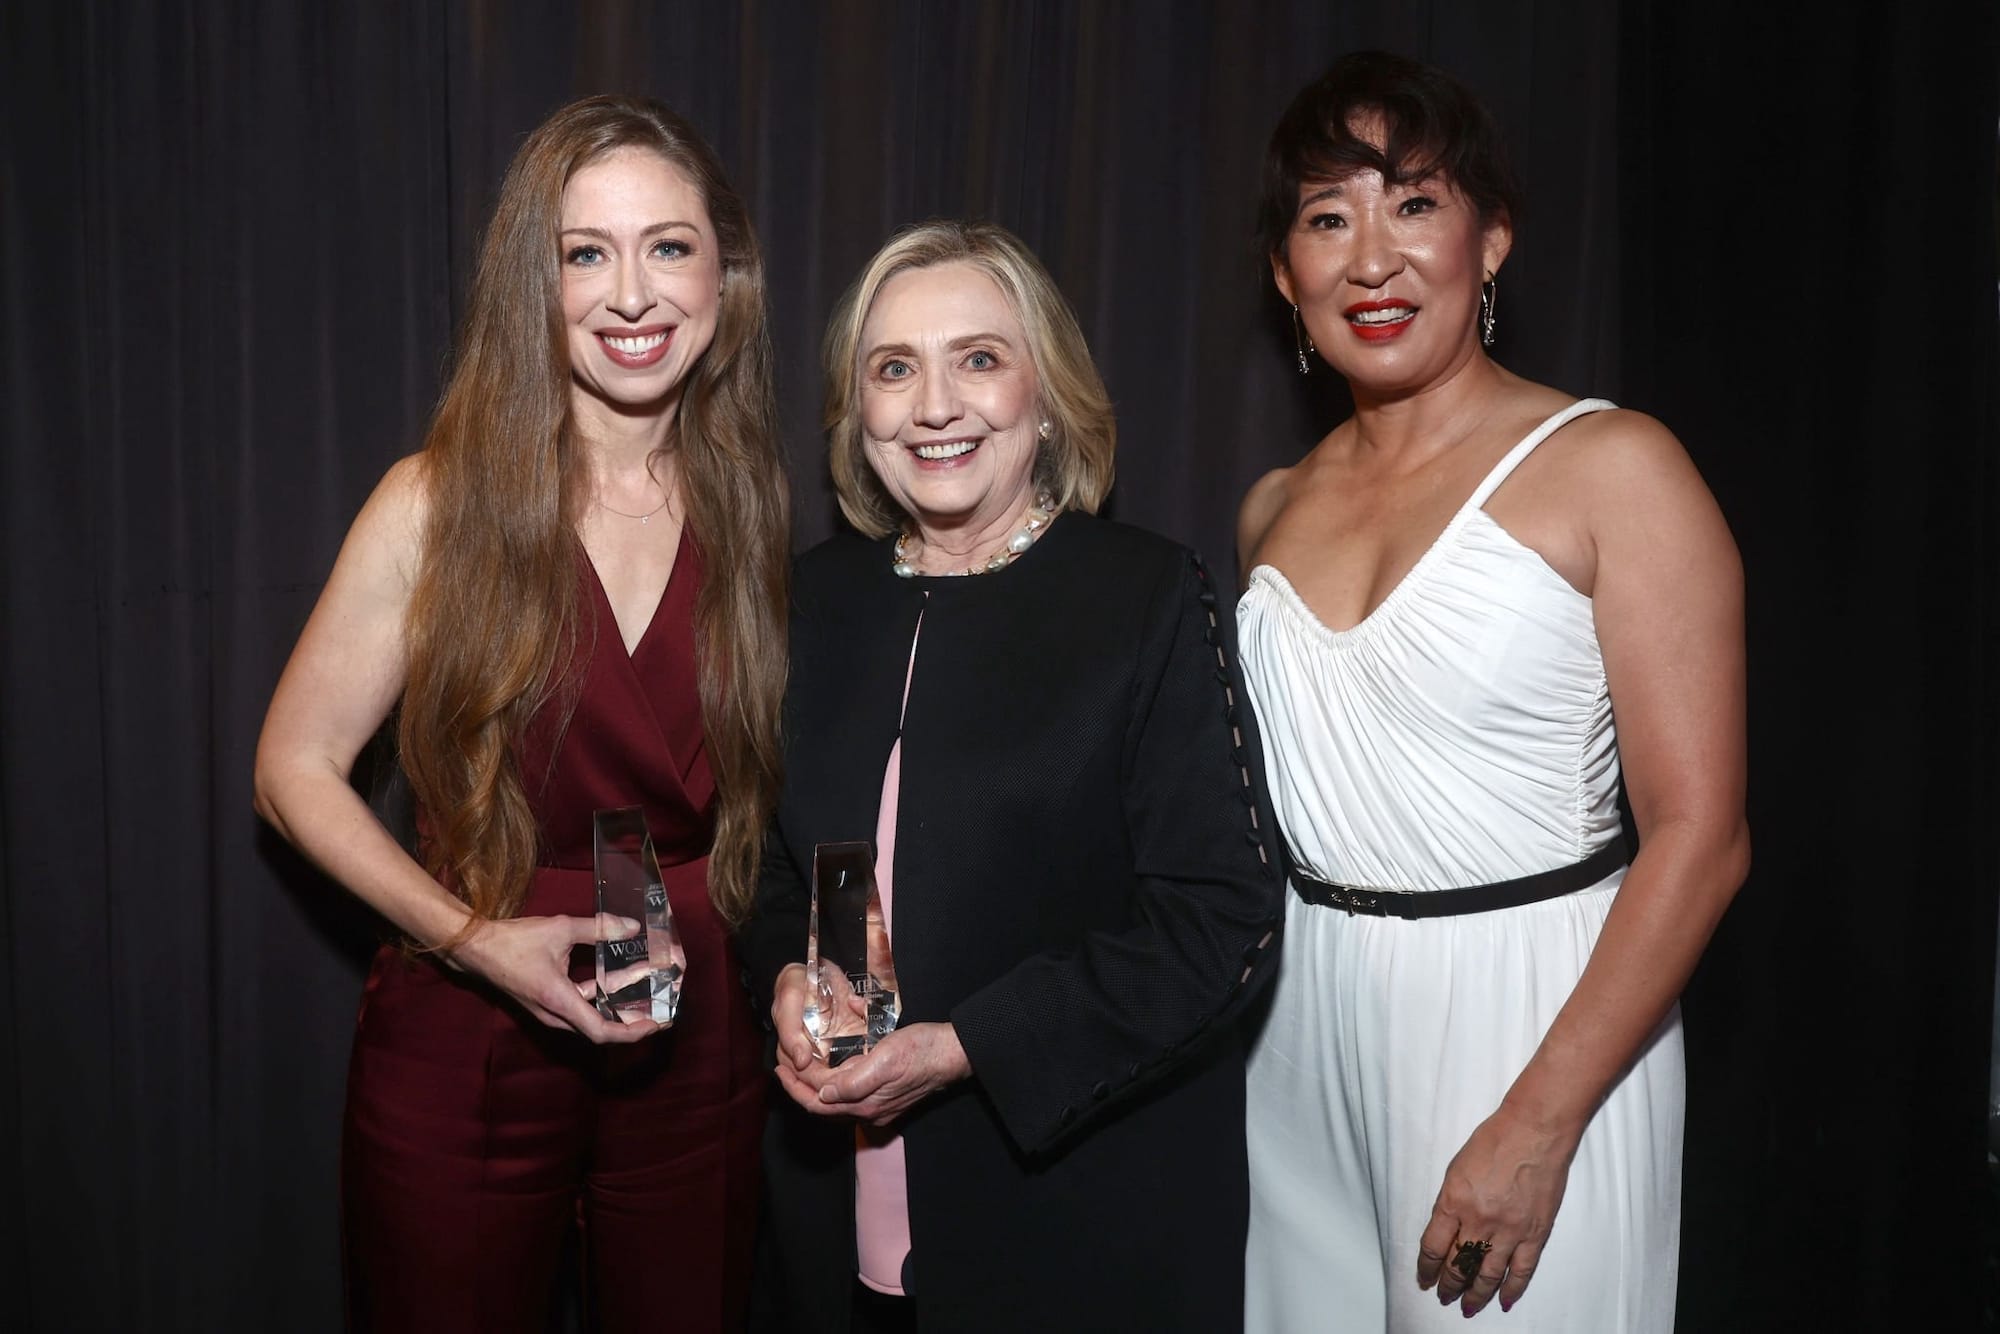 Chelsea Clinton and Hillary Clinton posing with thier awards alongside 'Killing Eve' actress Sandra Oh.